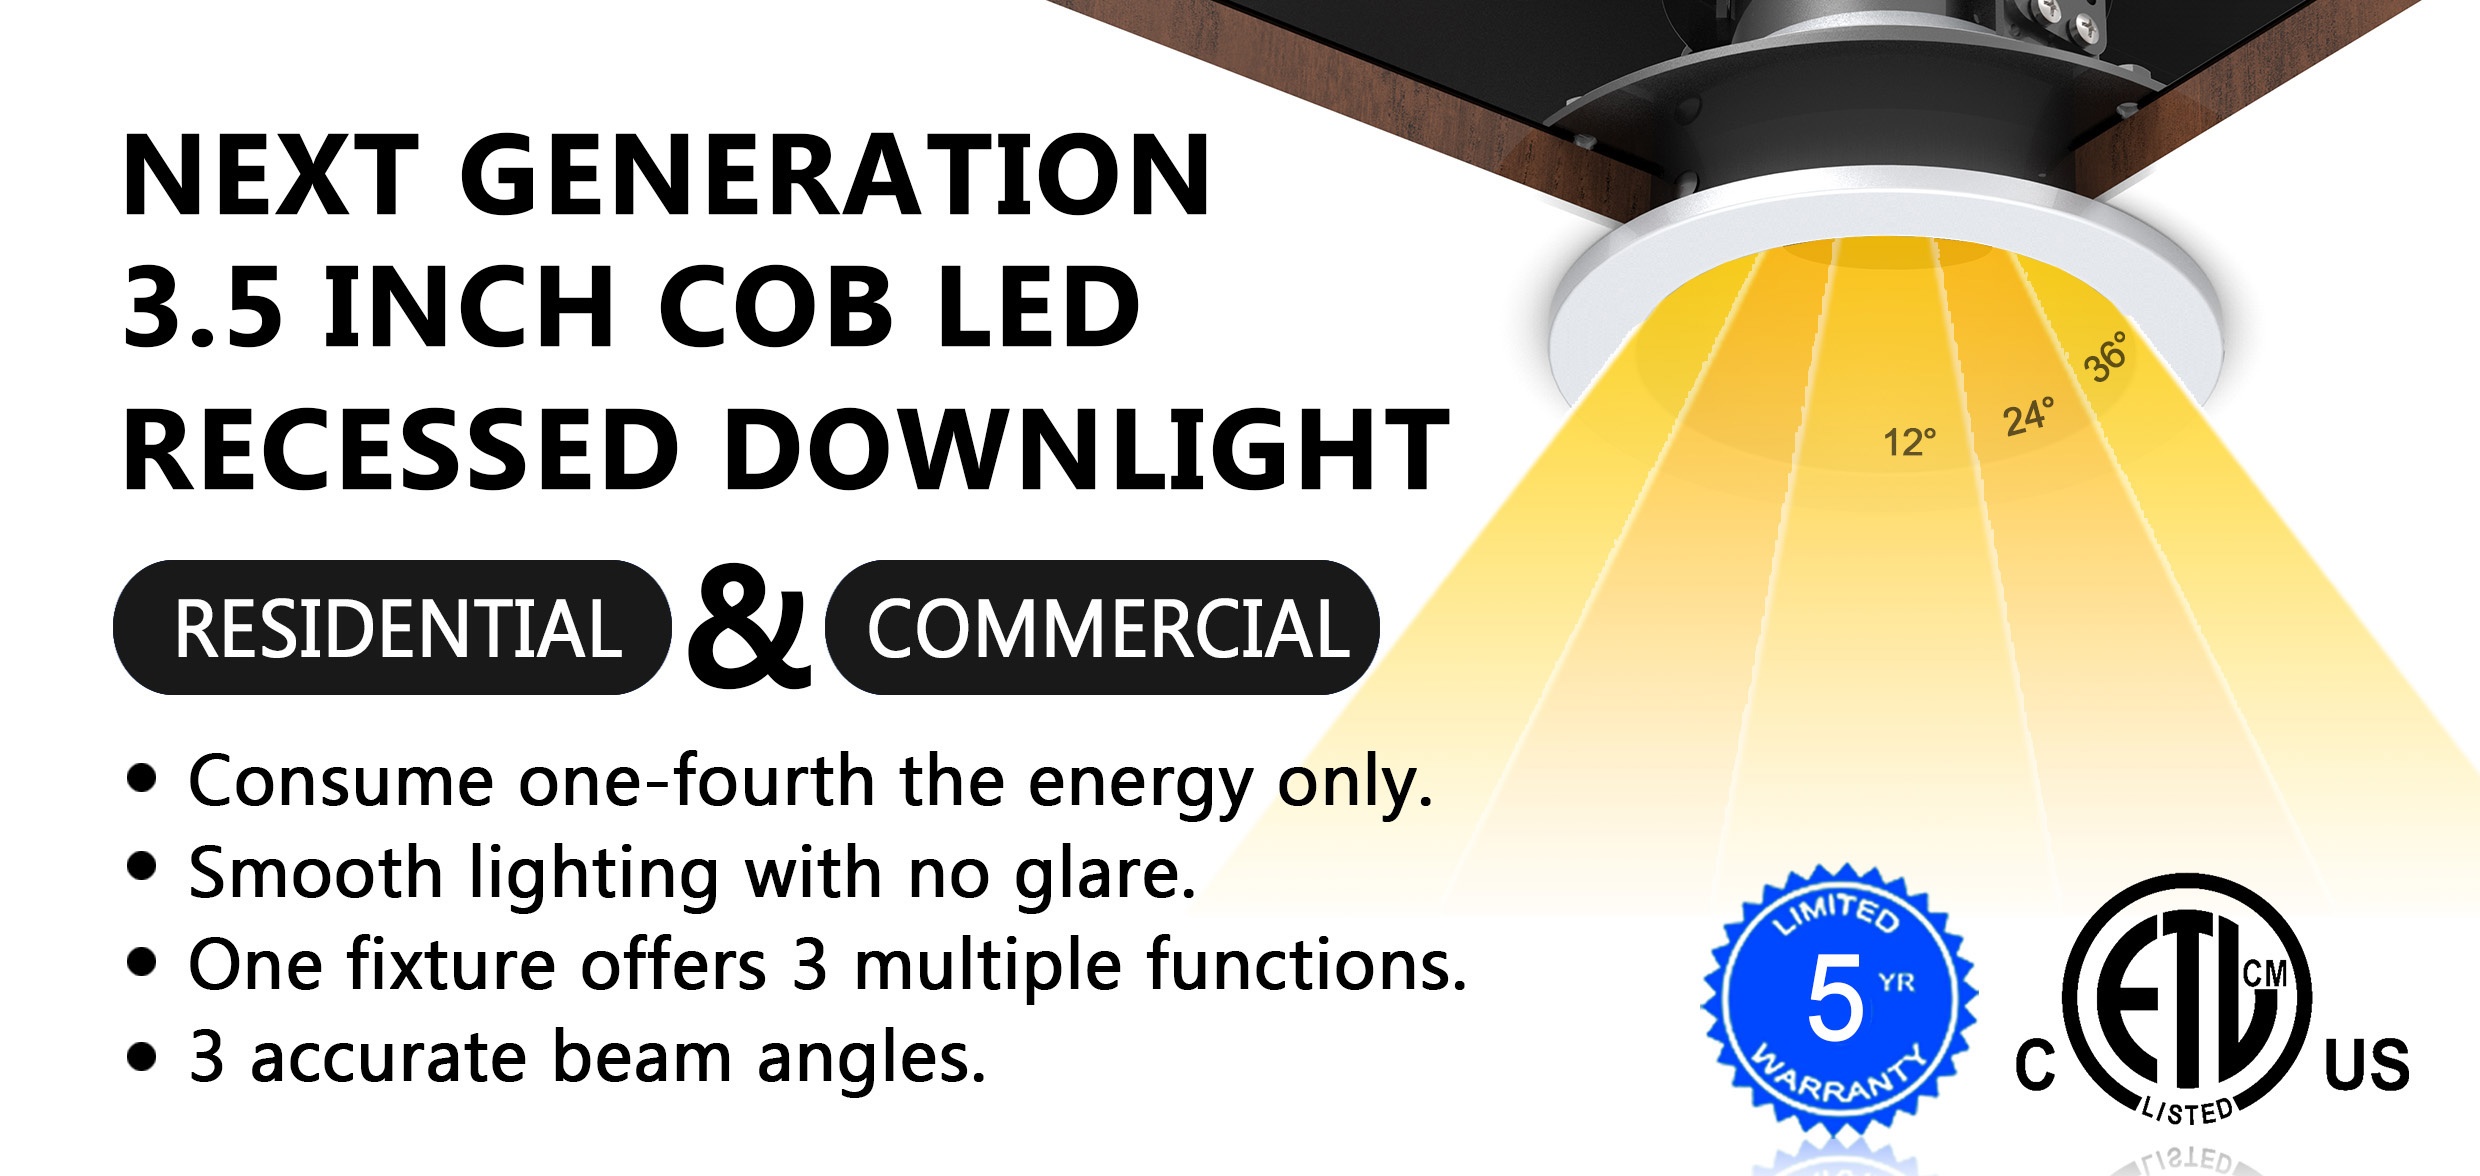 Next Generation 3.5 Inch COB LED  Recessed Downlight